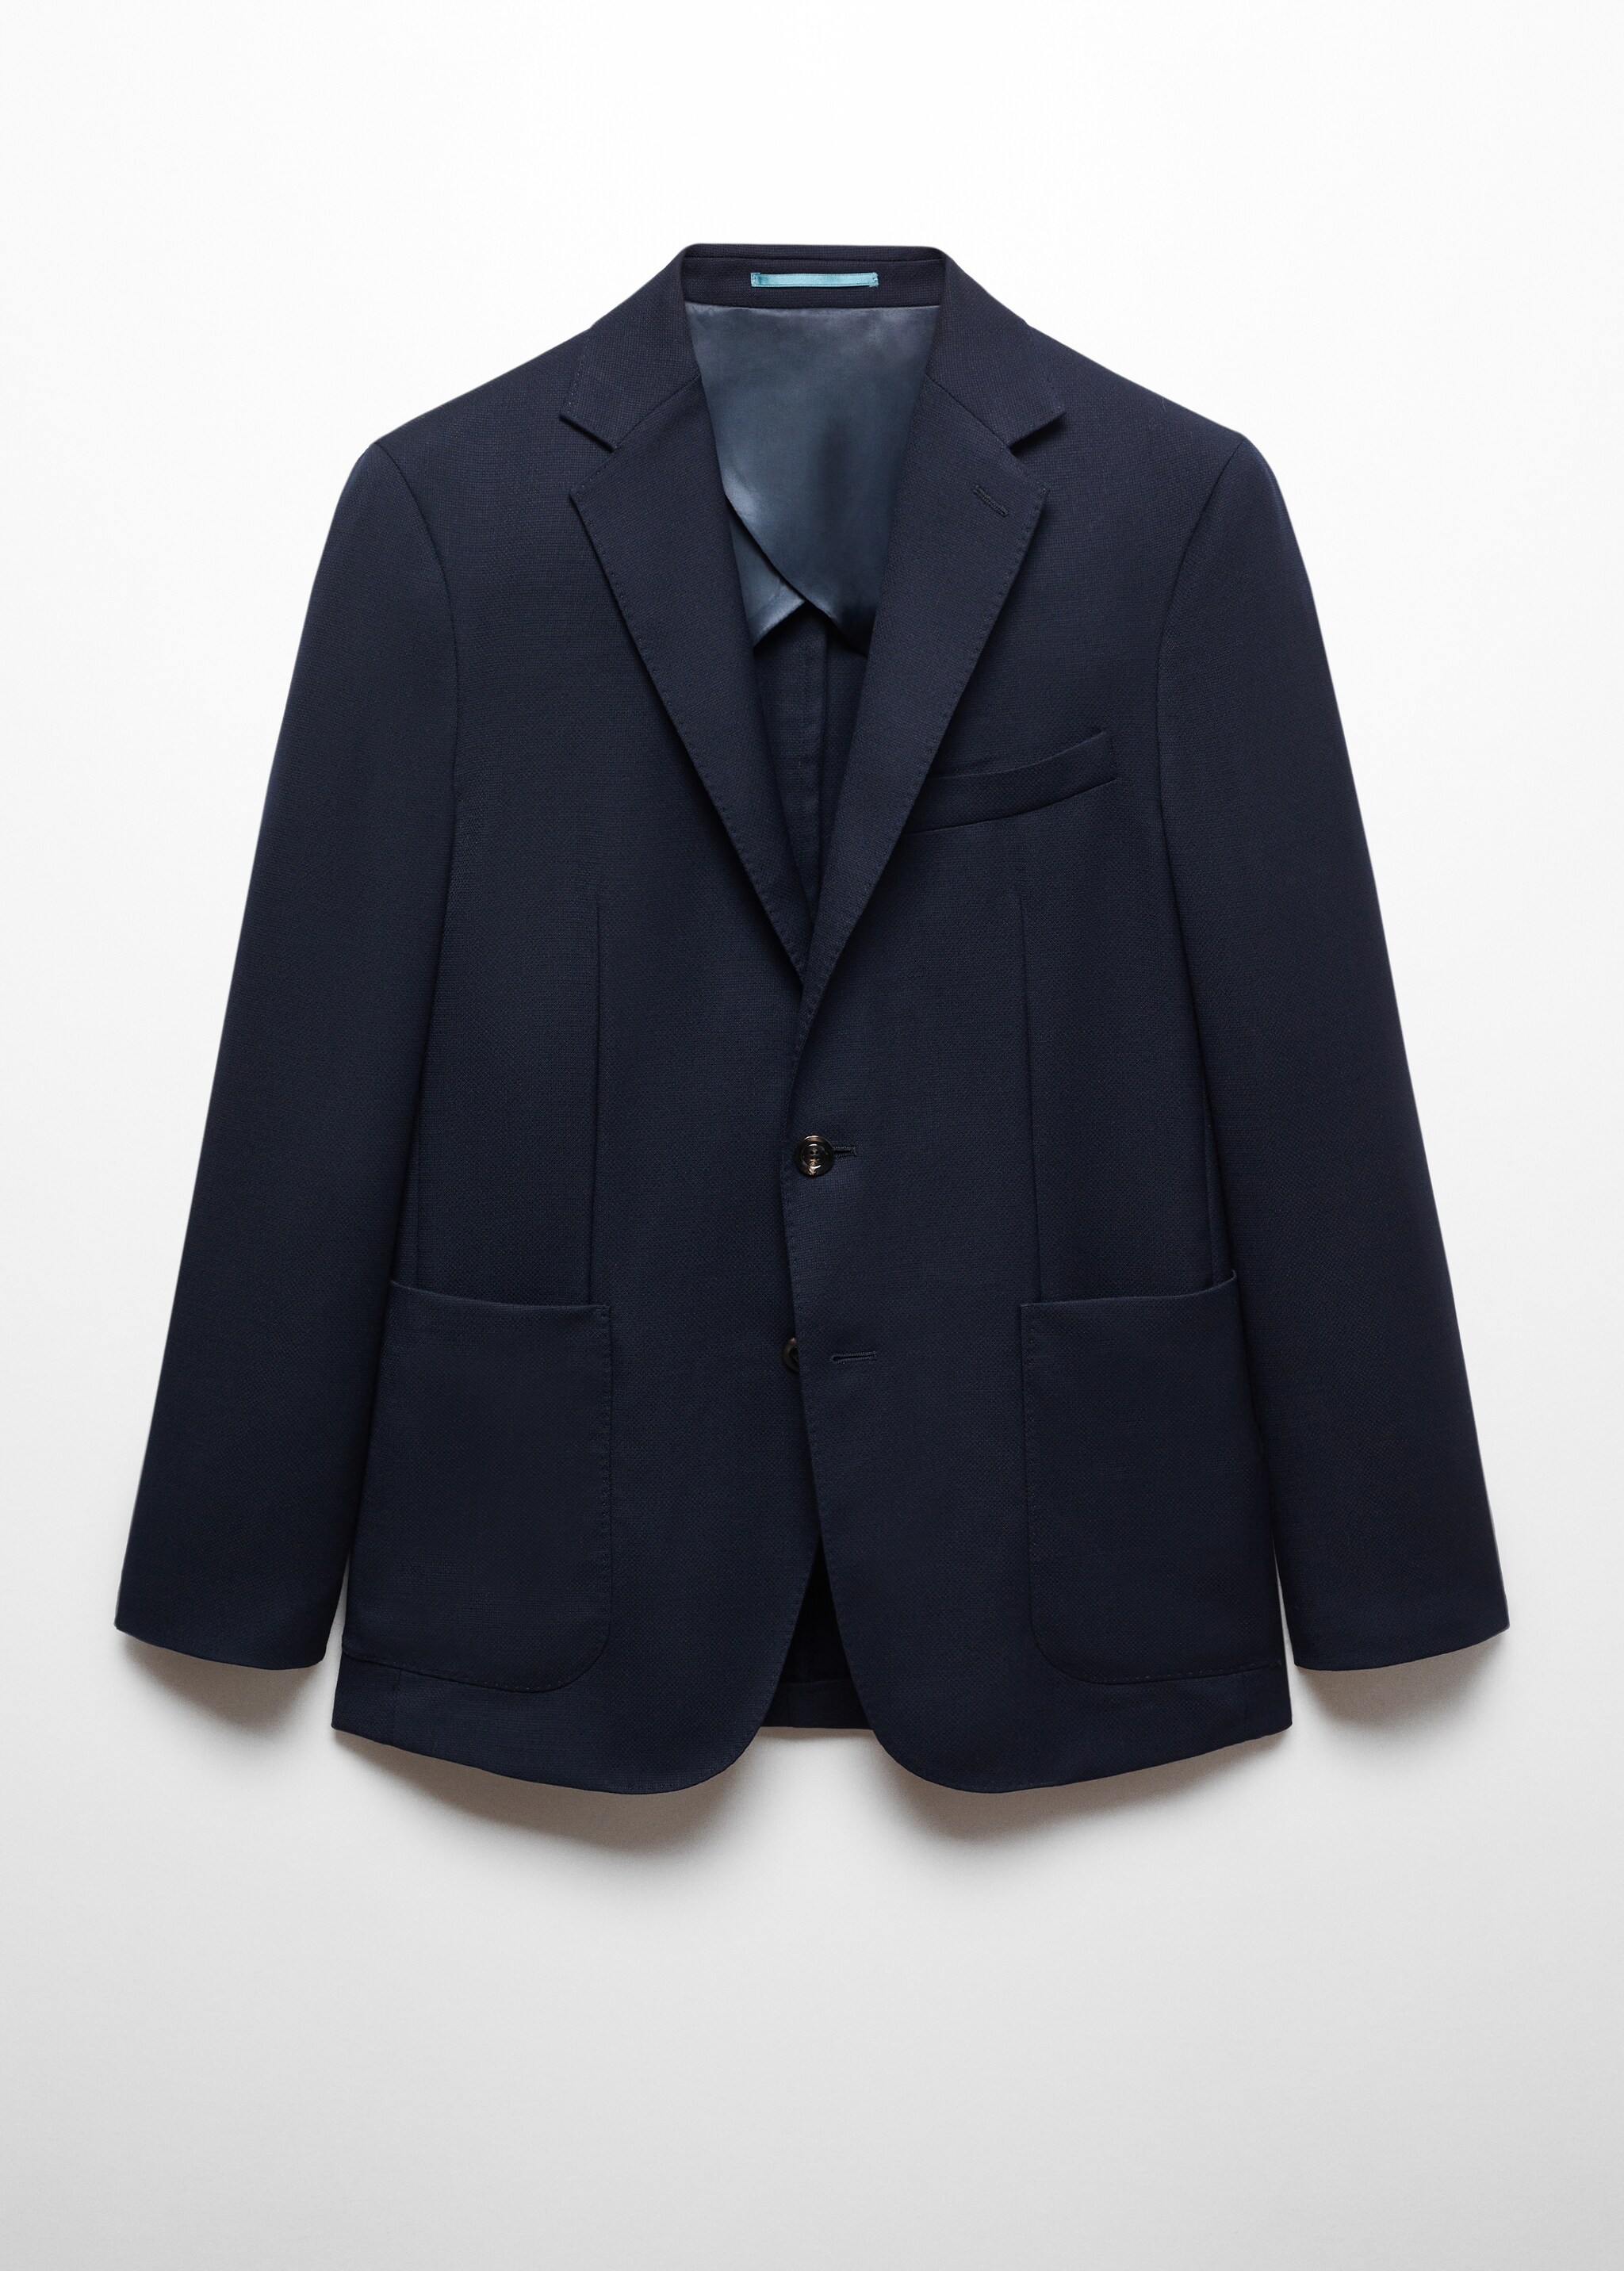 100% Italian virgin wool slim-fit suit jacket - Article without model